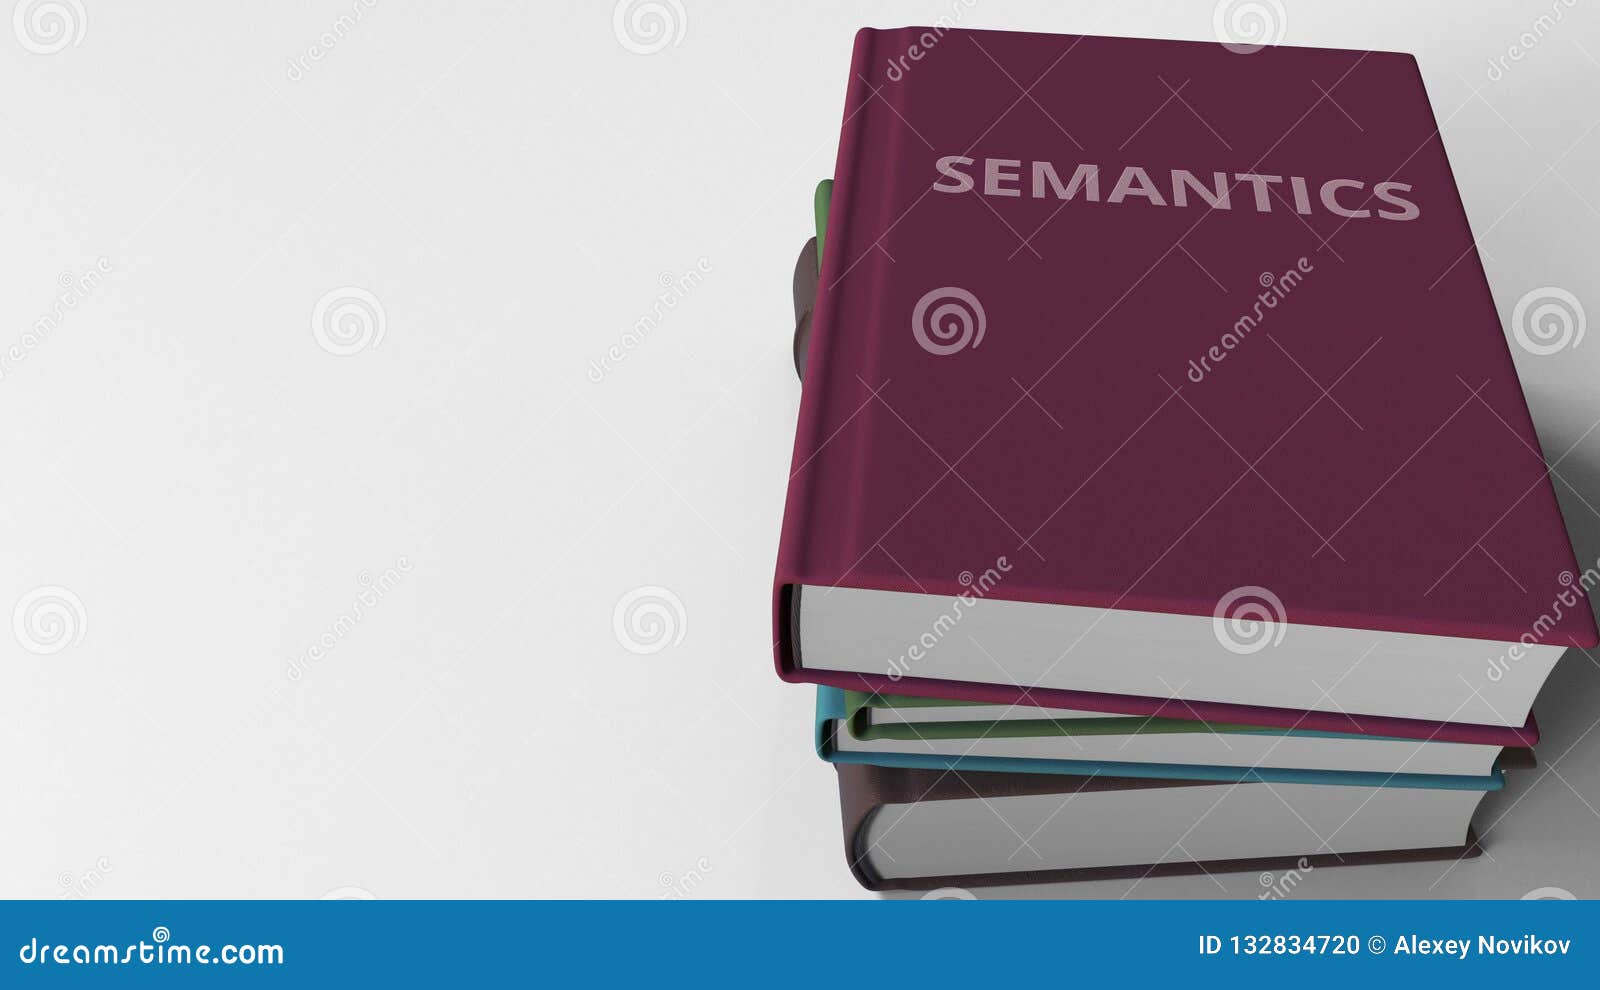 book with semantics title. 3d rendering